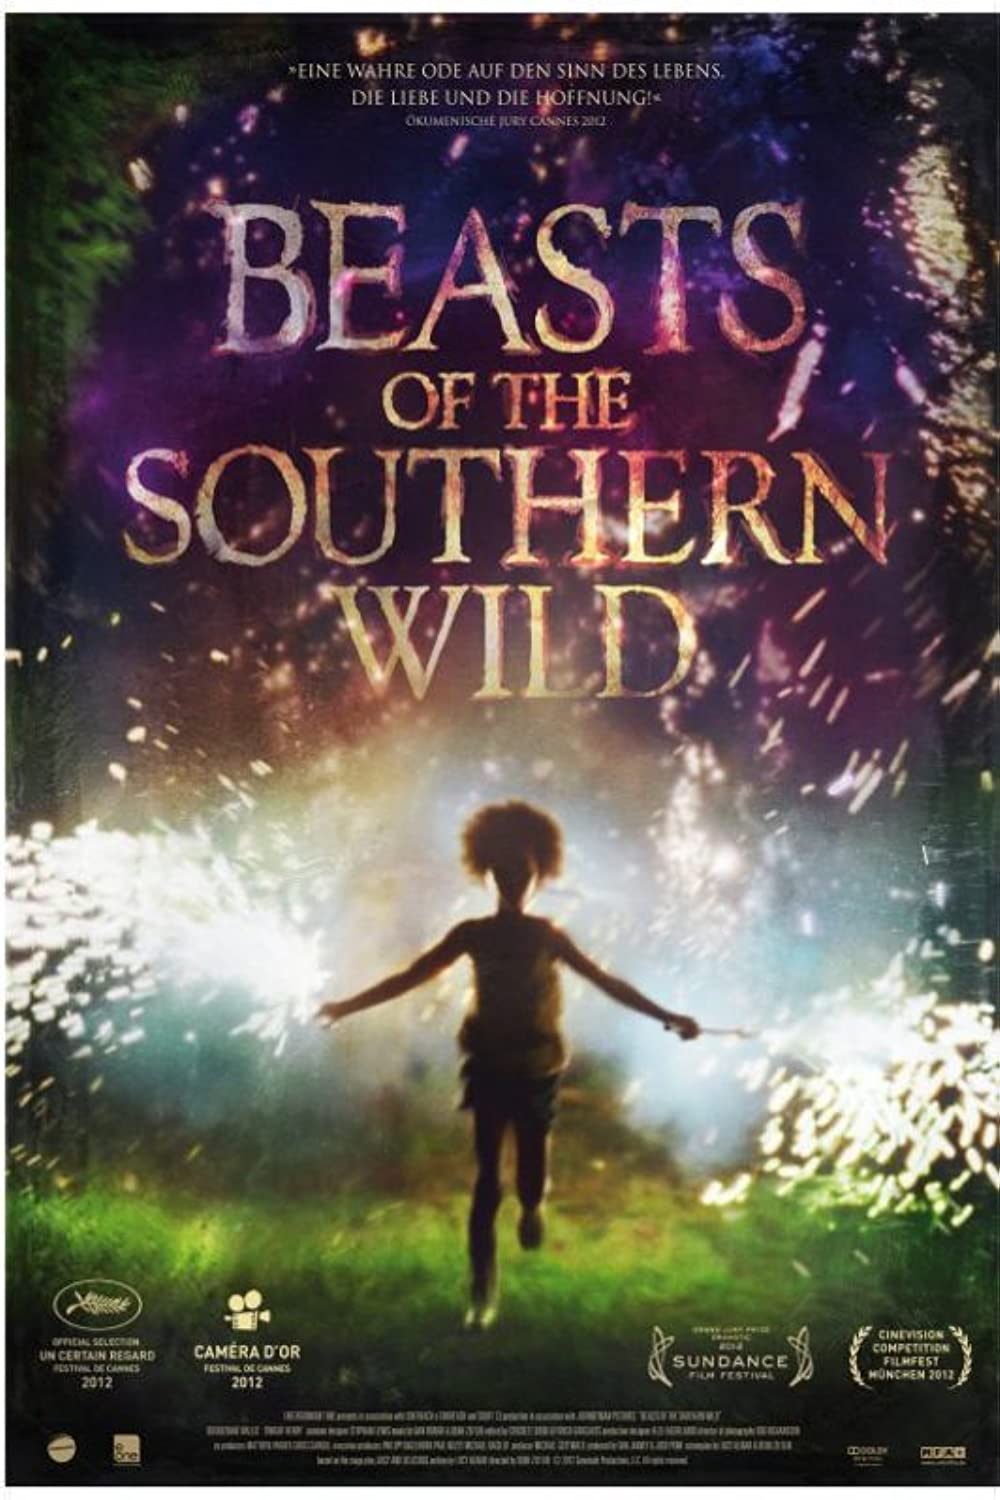 Filmbeschreibung zu Beasts of the Southern Wild